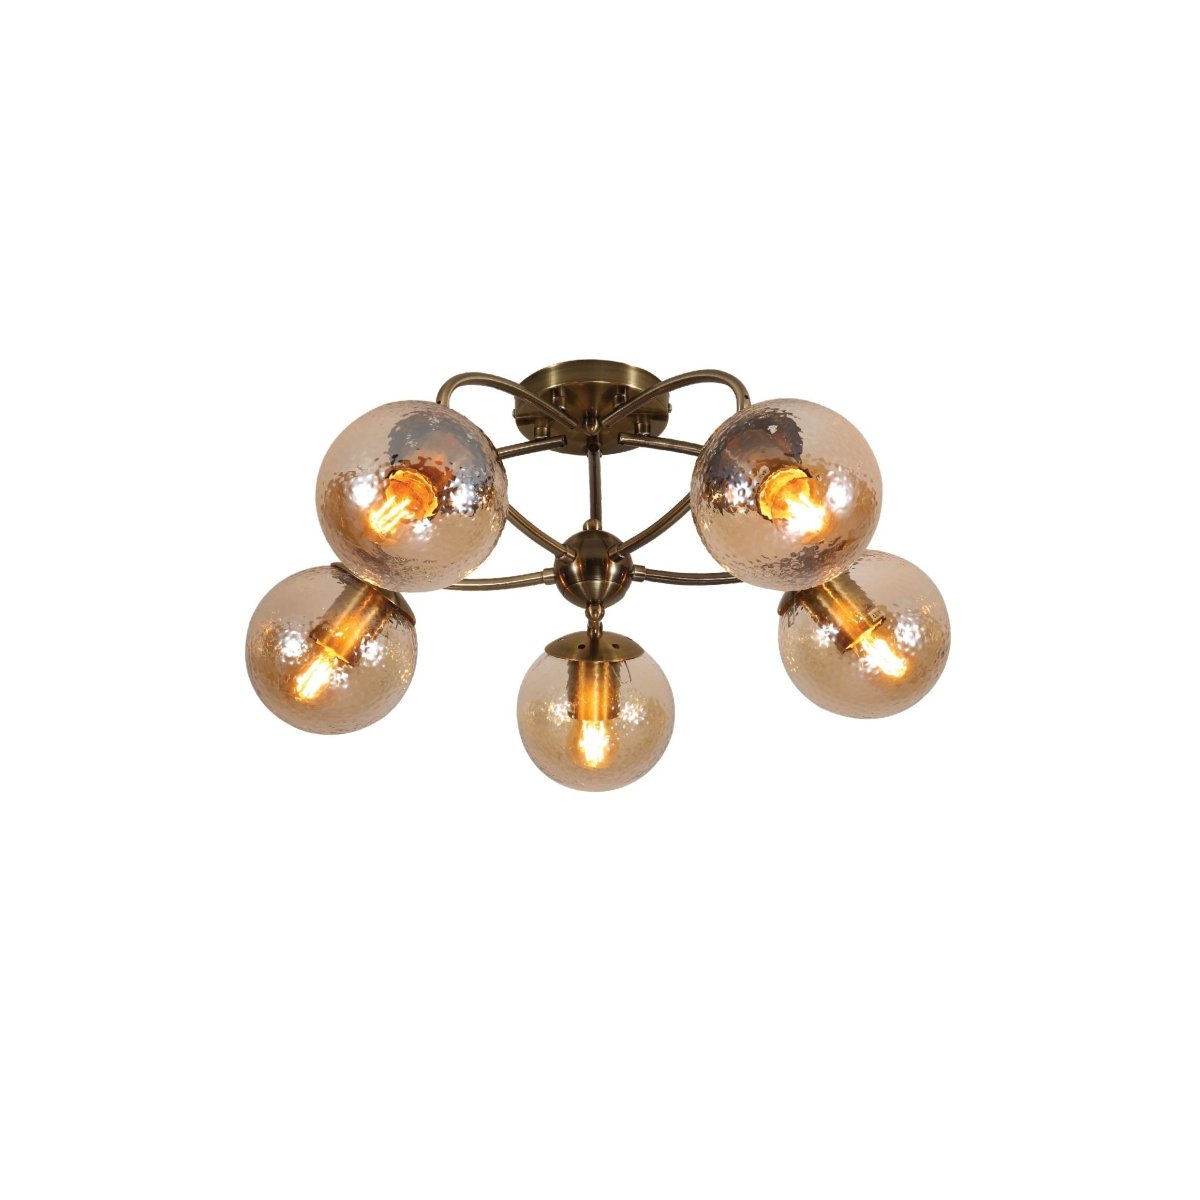 Main image of Textured Amber Globe Antique Brass Semi Circle Arm Semi Flush Ceiling Light | TEKLED 159-17758